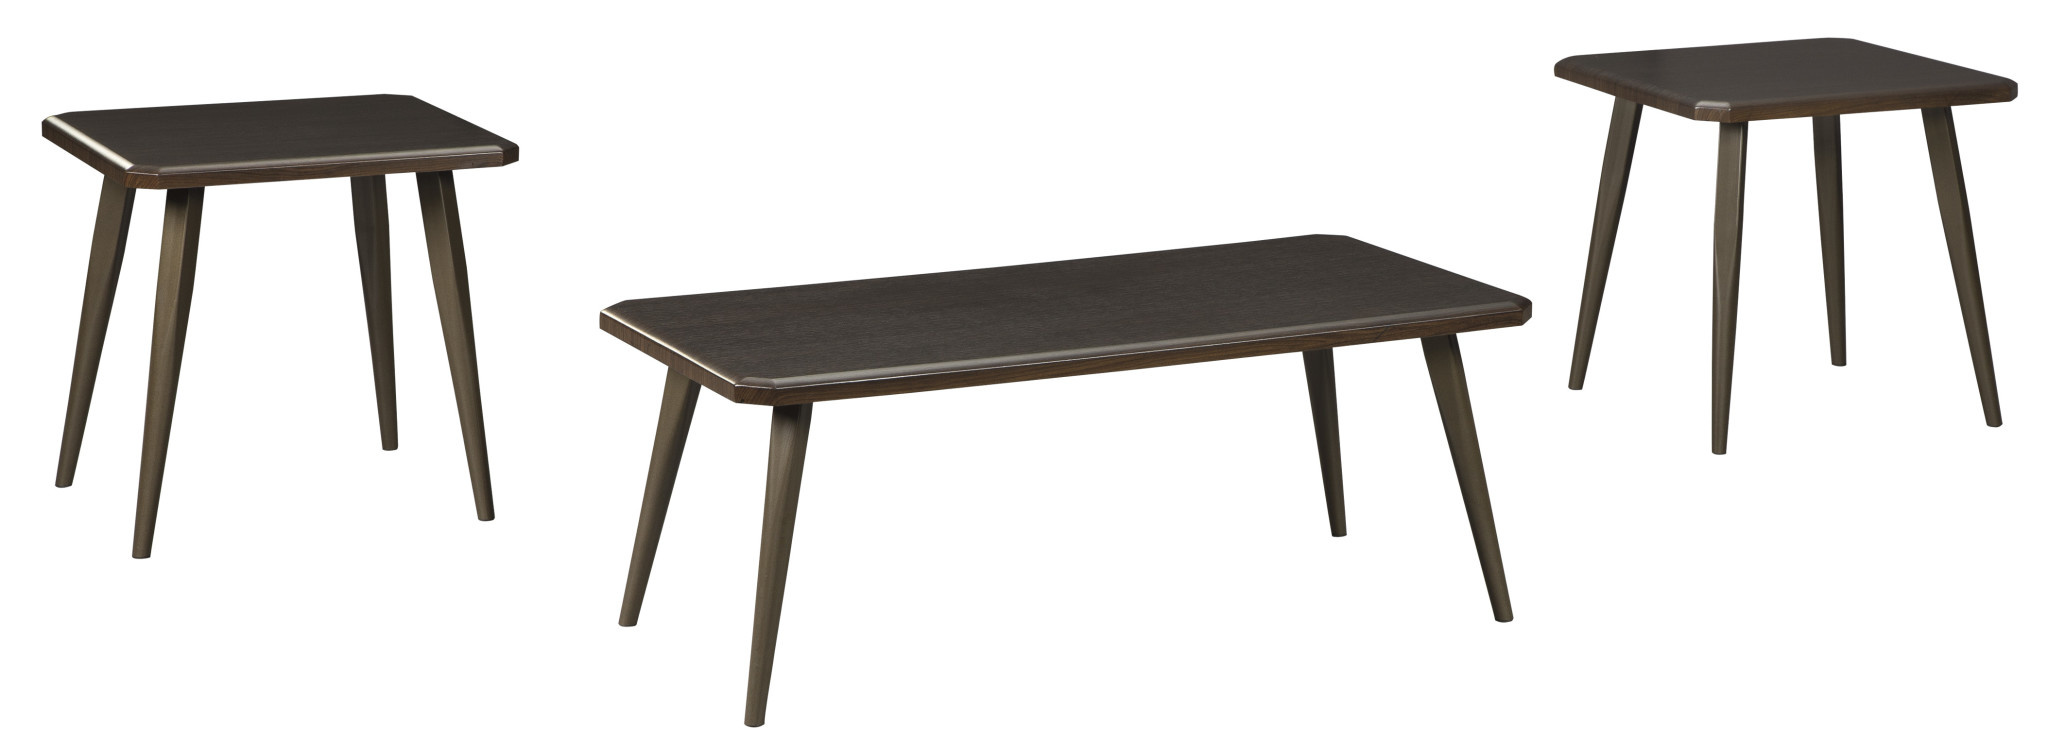 Signature Design "Fazani" Dark Brown- Occasional Tables set of 3- Mid-Century Modern T037-13